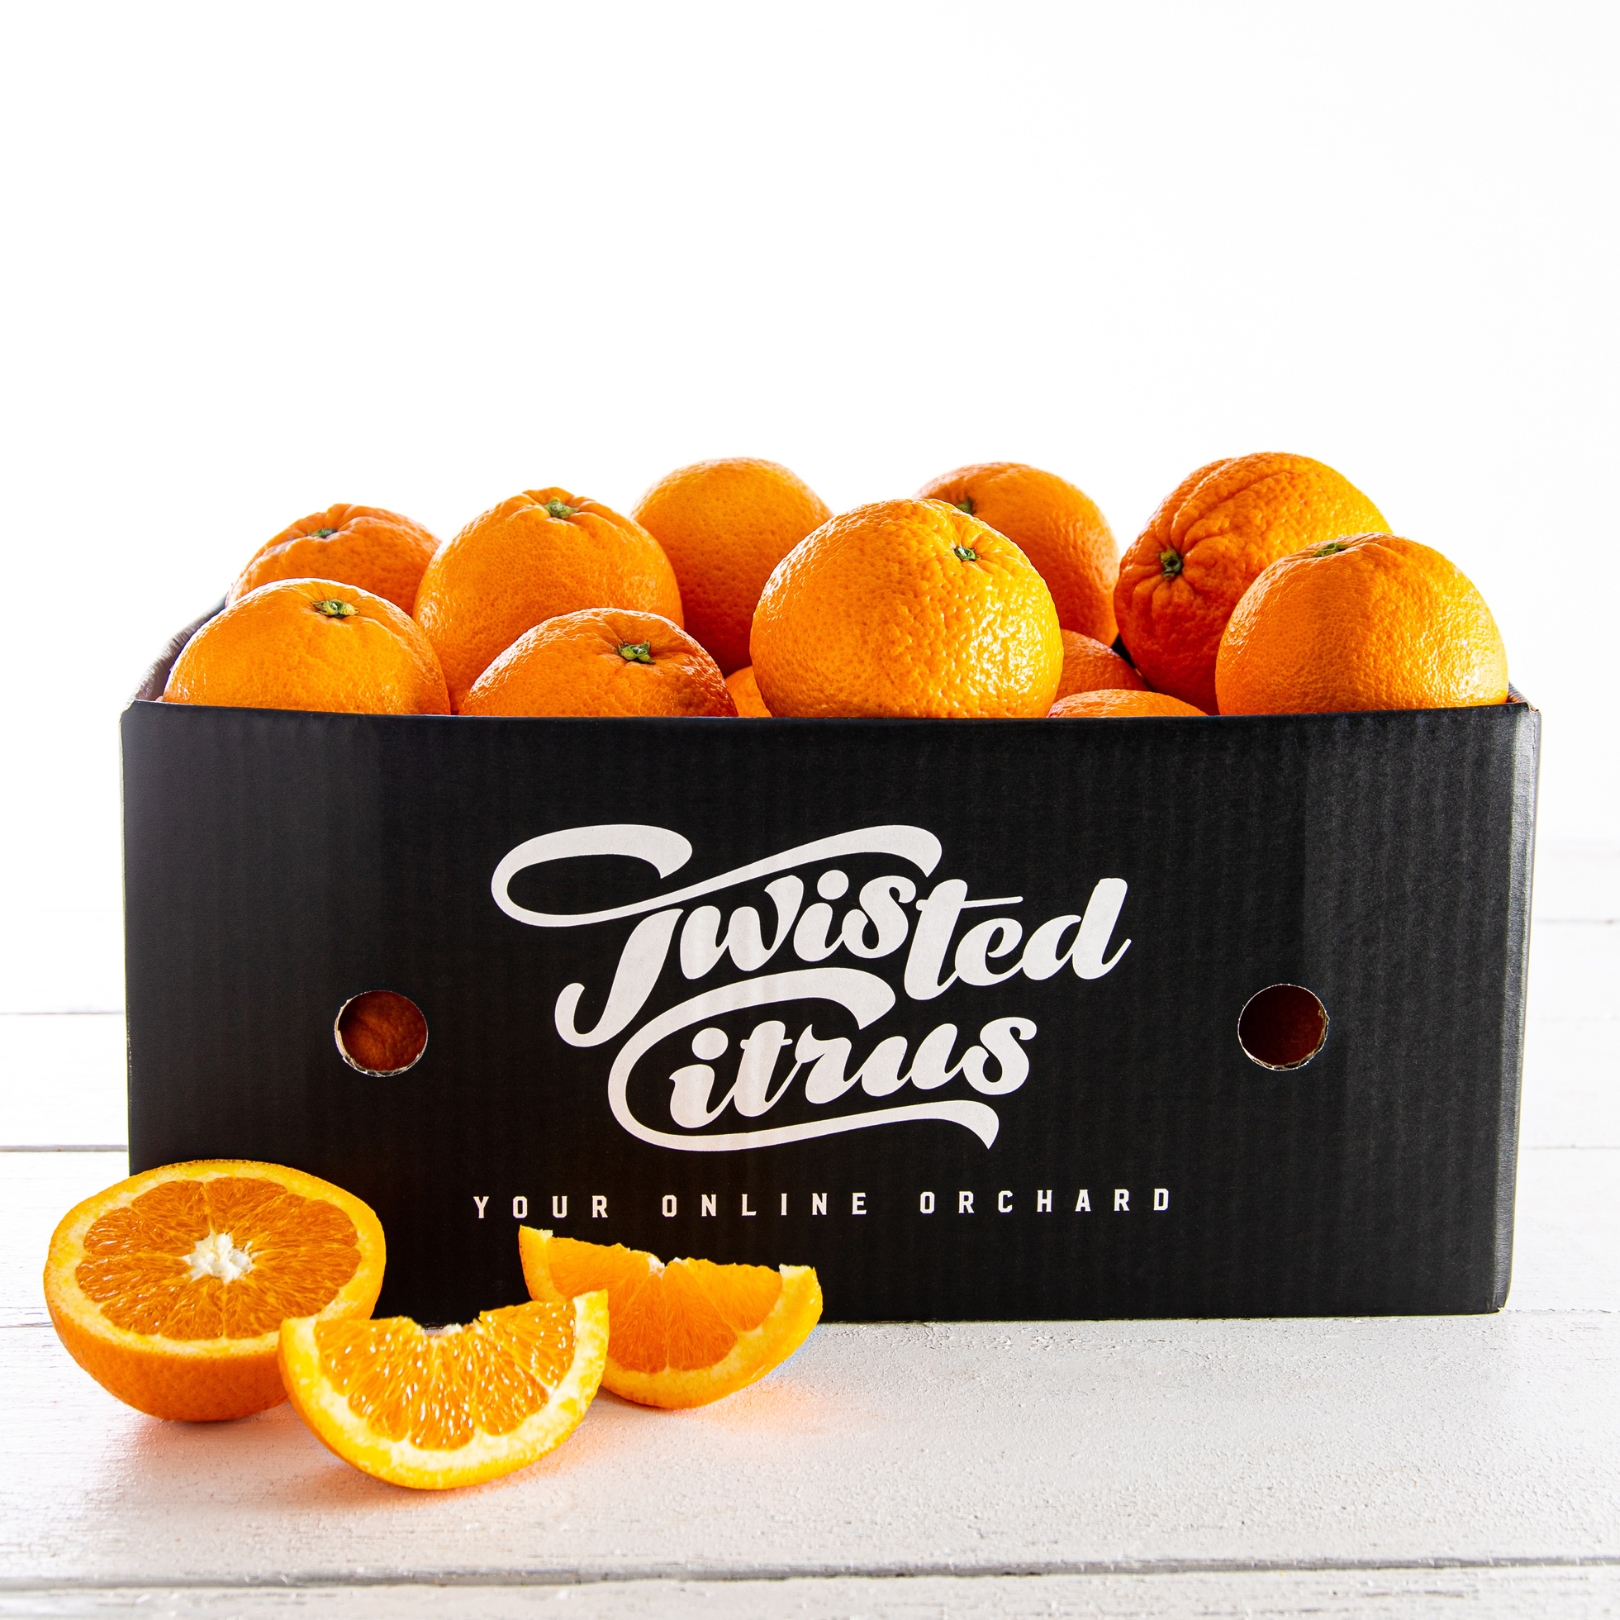 Oranges - Navel fruit box delivery nz